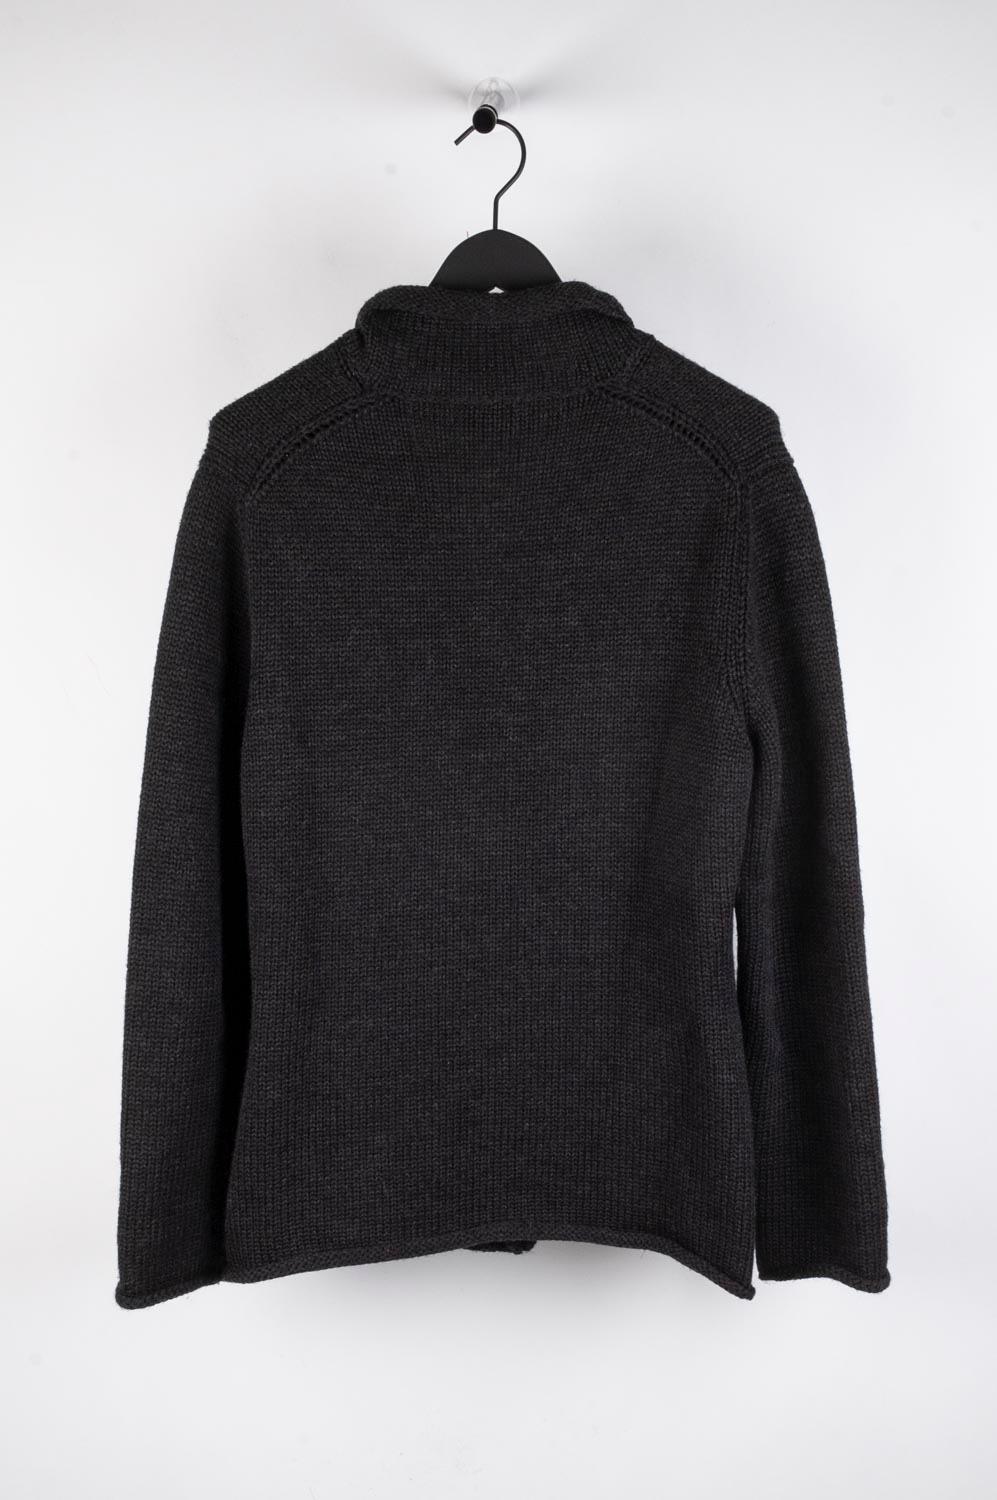 Prada Heavy Cardigan Men Sweater Size 54 (Large) S513 For Sale 1